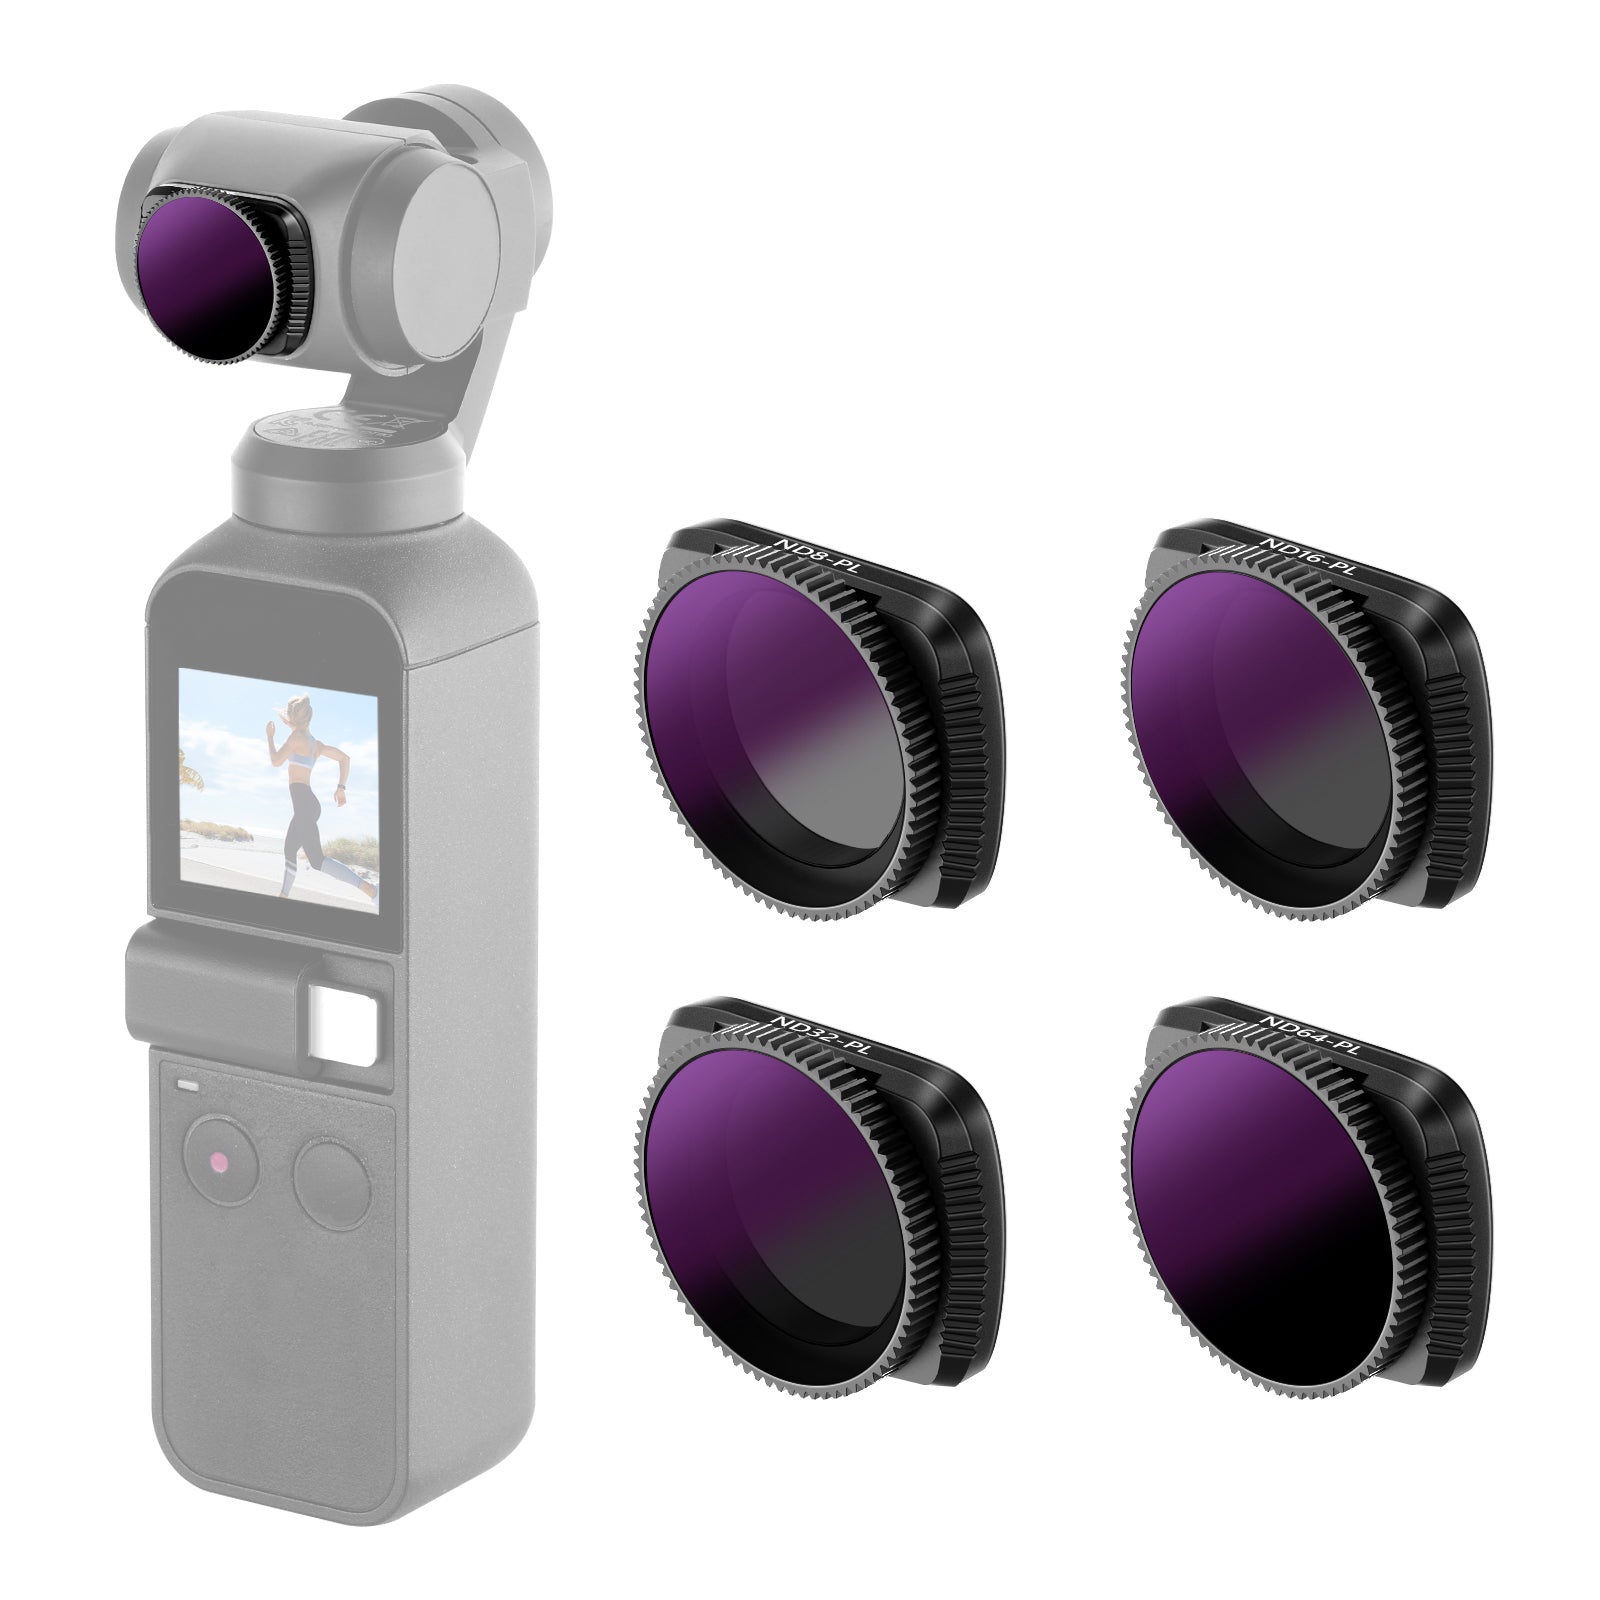 Buy DJI Osmo Pocket - 3-Axis Stabilized Handheld Camera - DJI Store